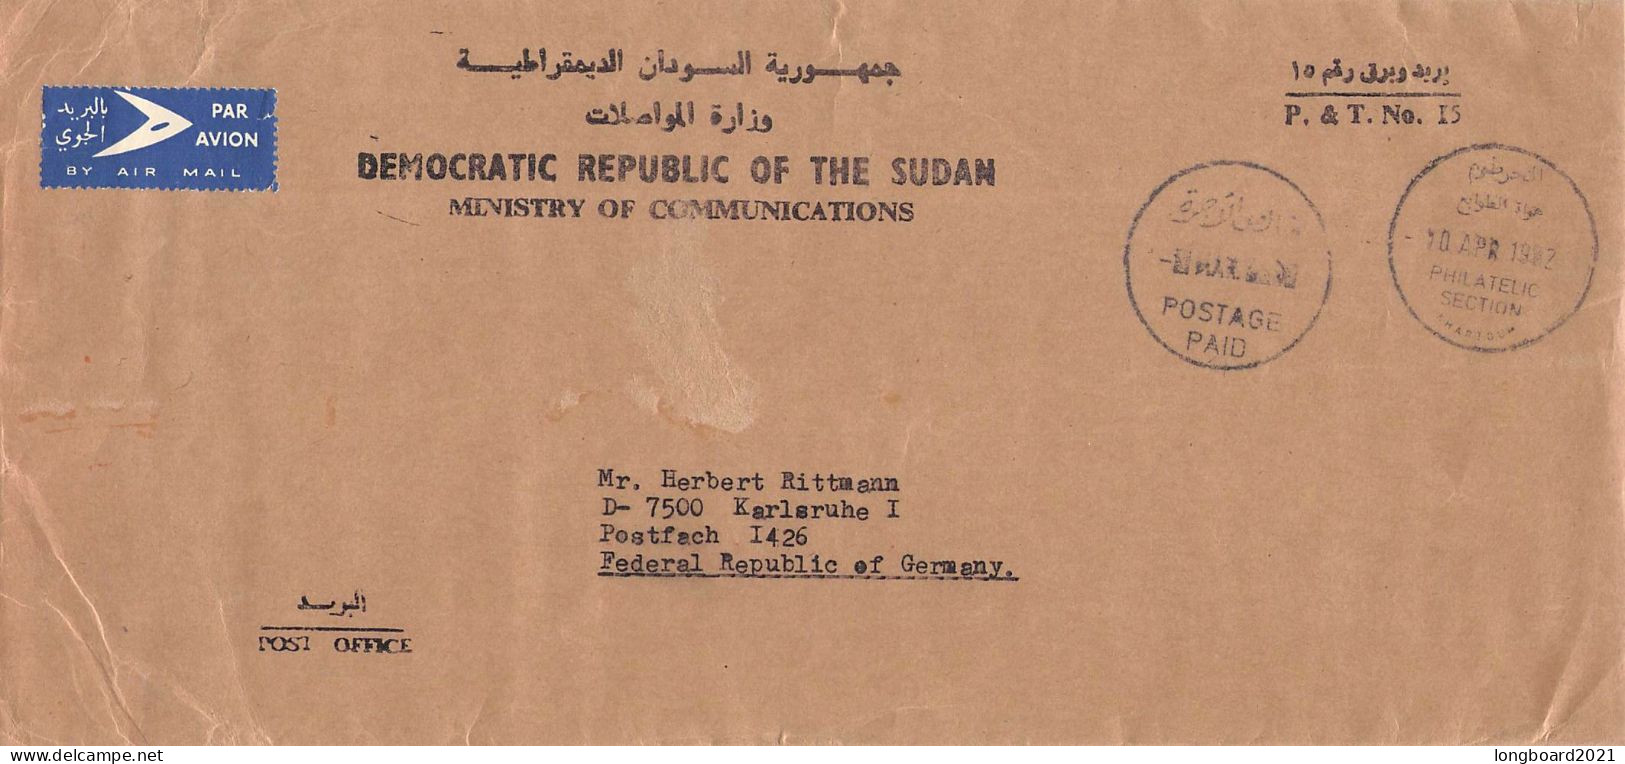 SUDAN - AIRMAIL POSTAGE PAID 1982 - KARLSRUHE / DE. / 5216 - Soudan (1954-...)